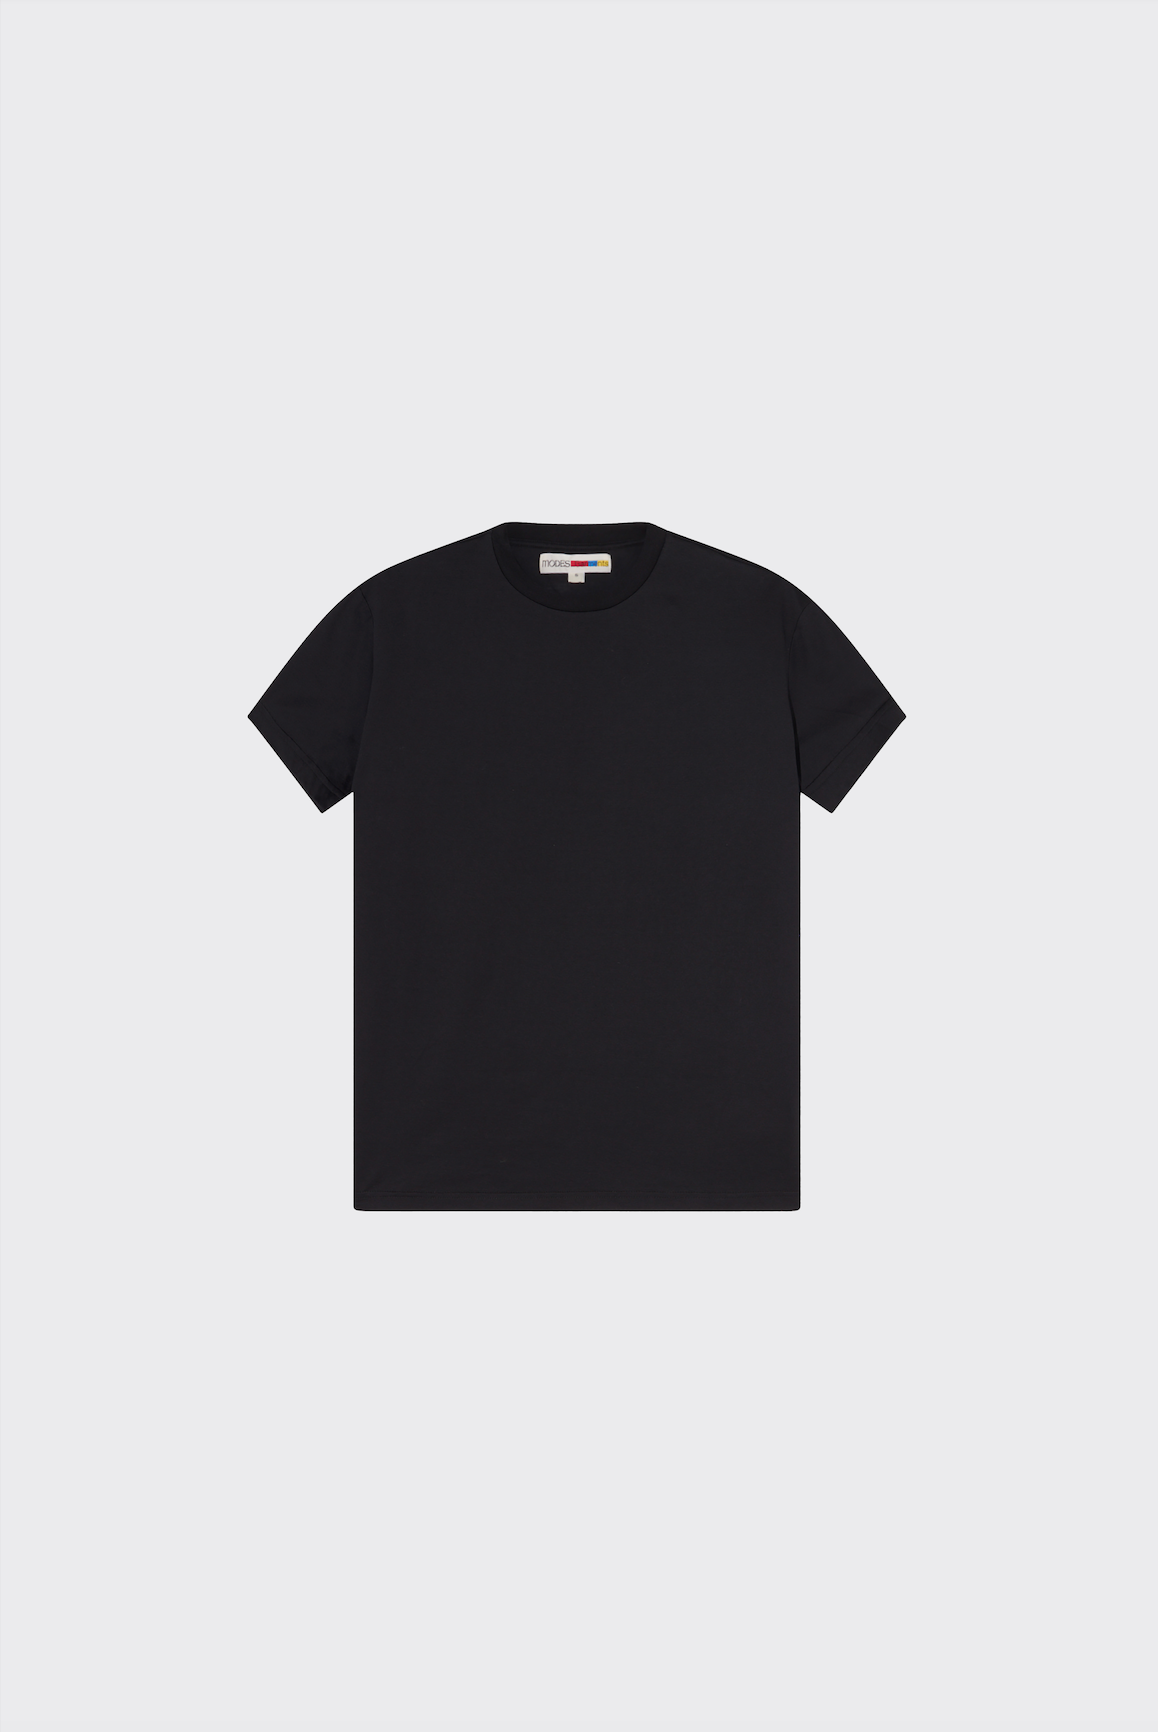 Unisex Plain Black T-shirt